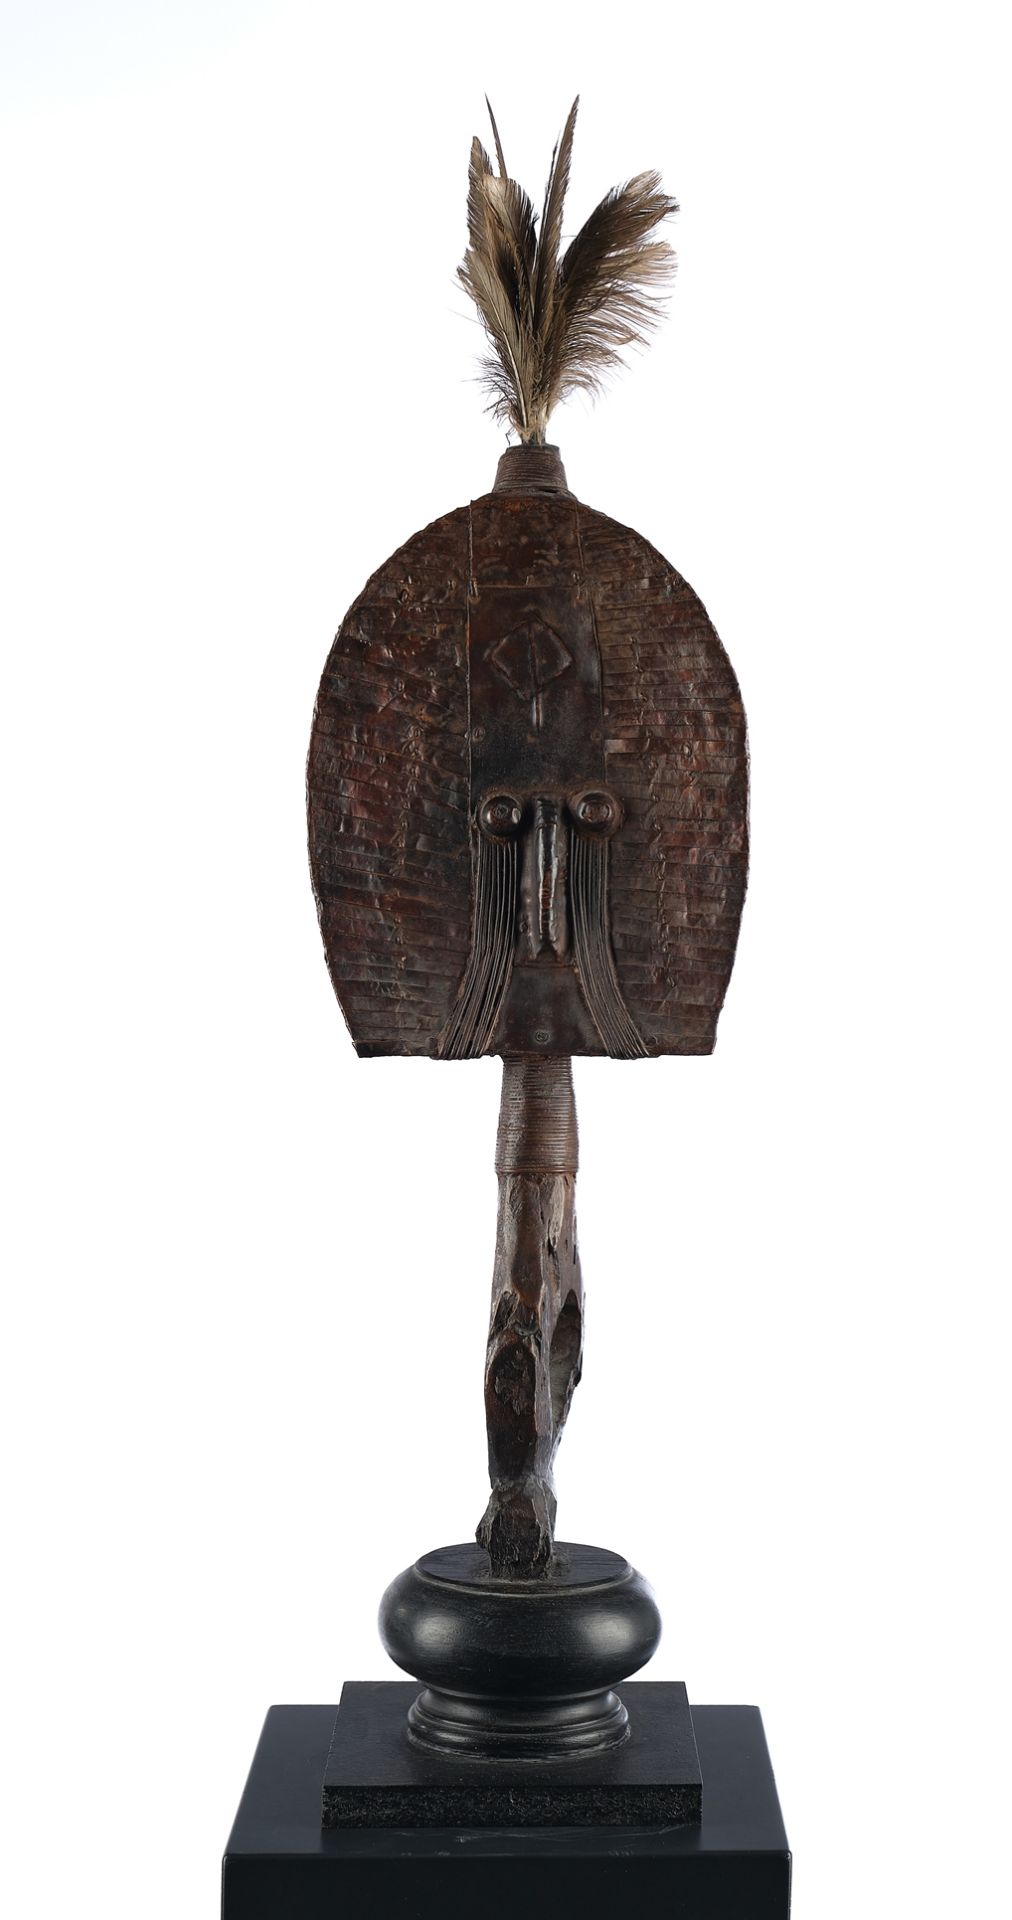 Reliquienfigur, Mahongwe, Gabun, Afrika, Grabwächter aus Holz, mit Metallstreifen und Blech belegt,